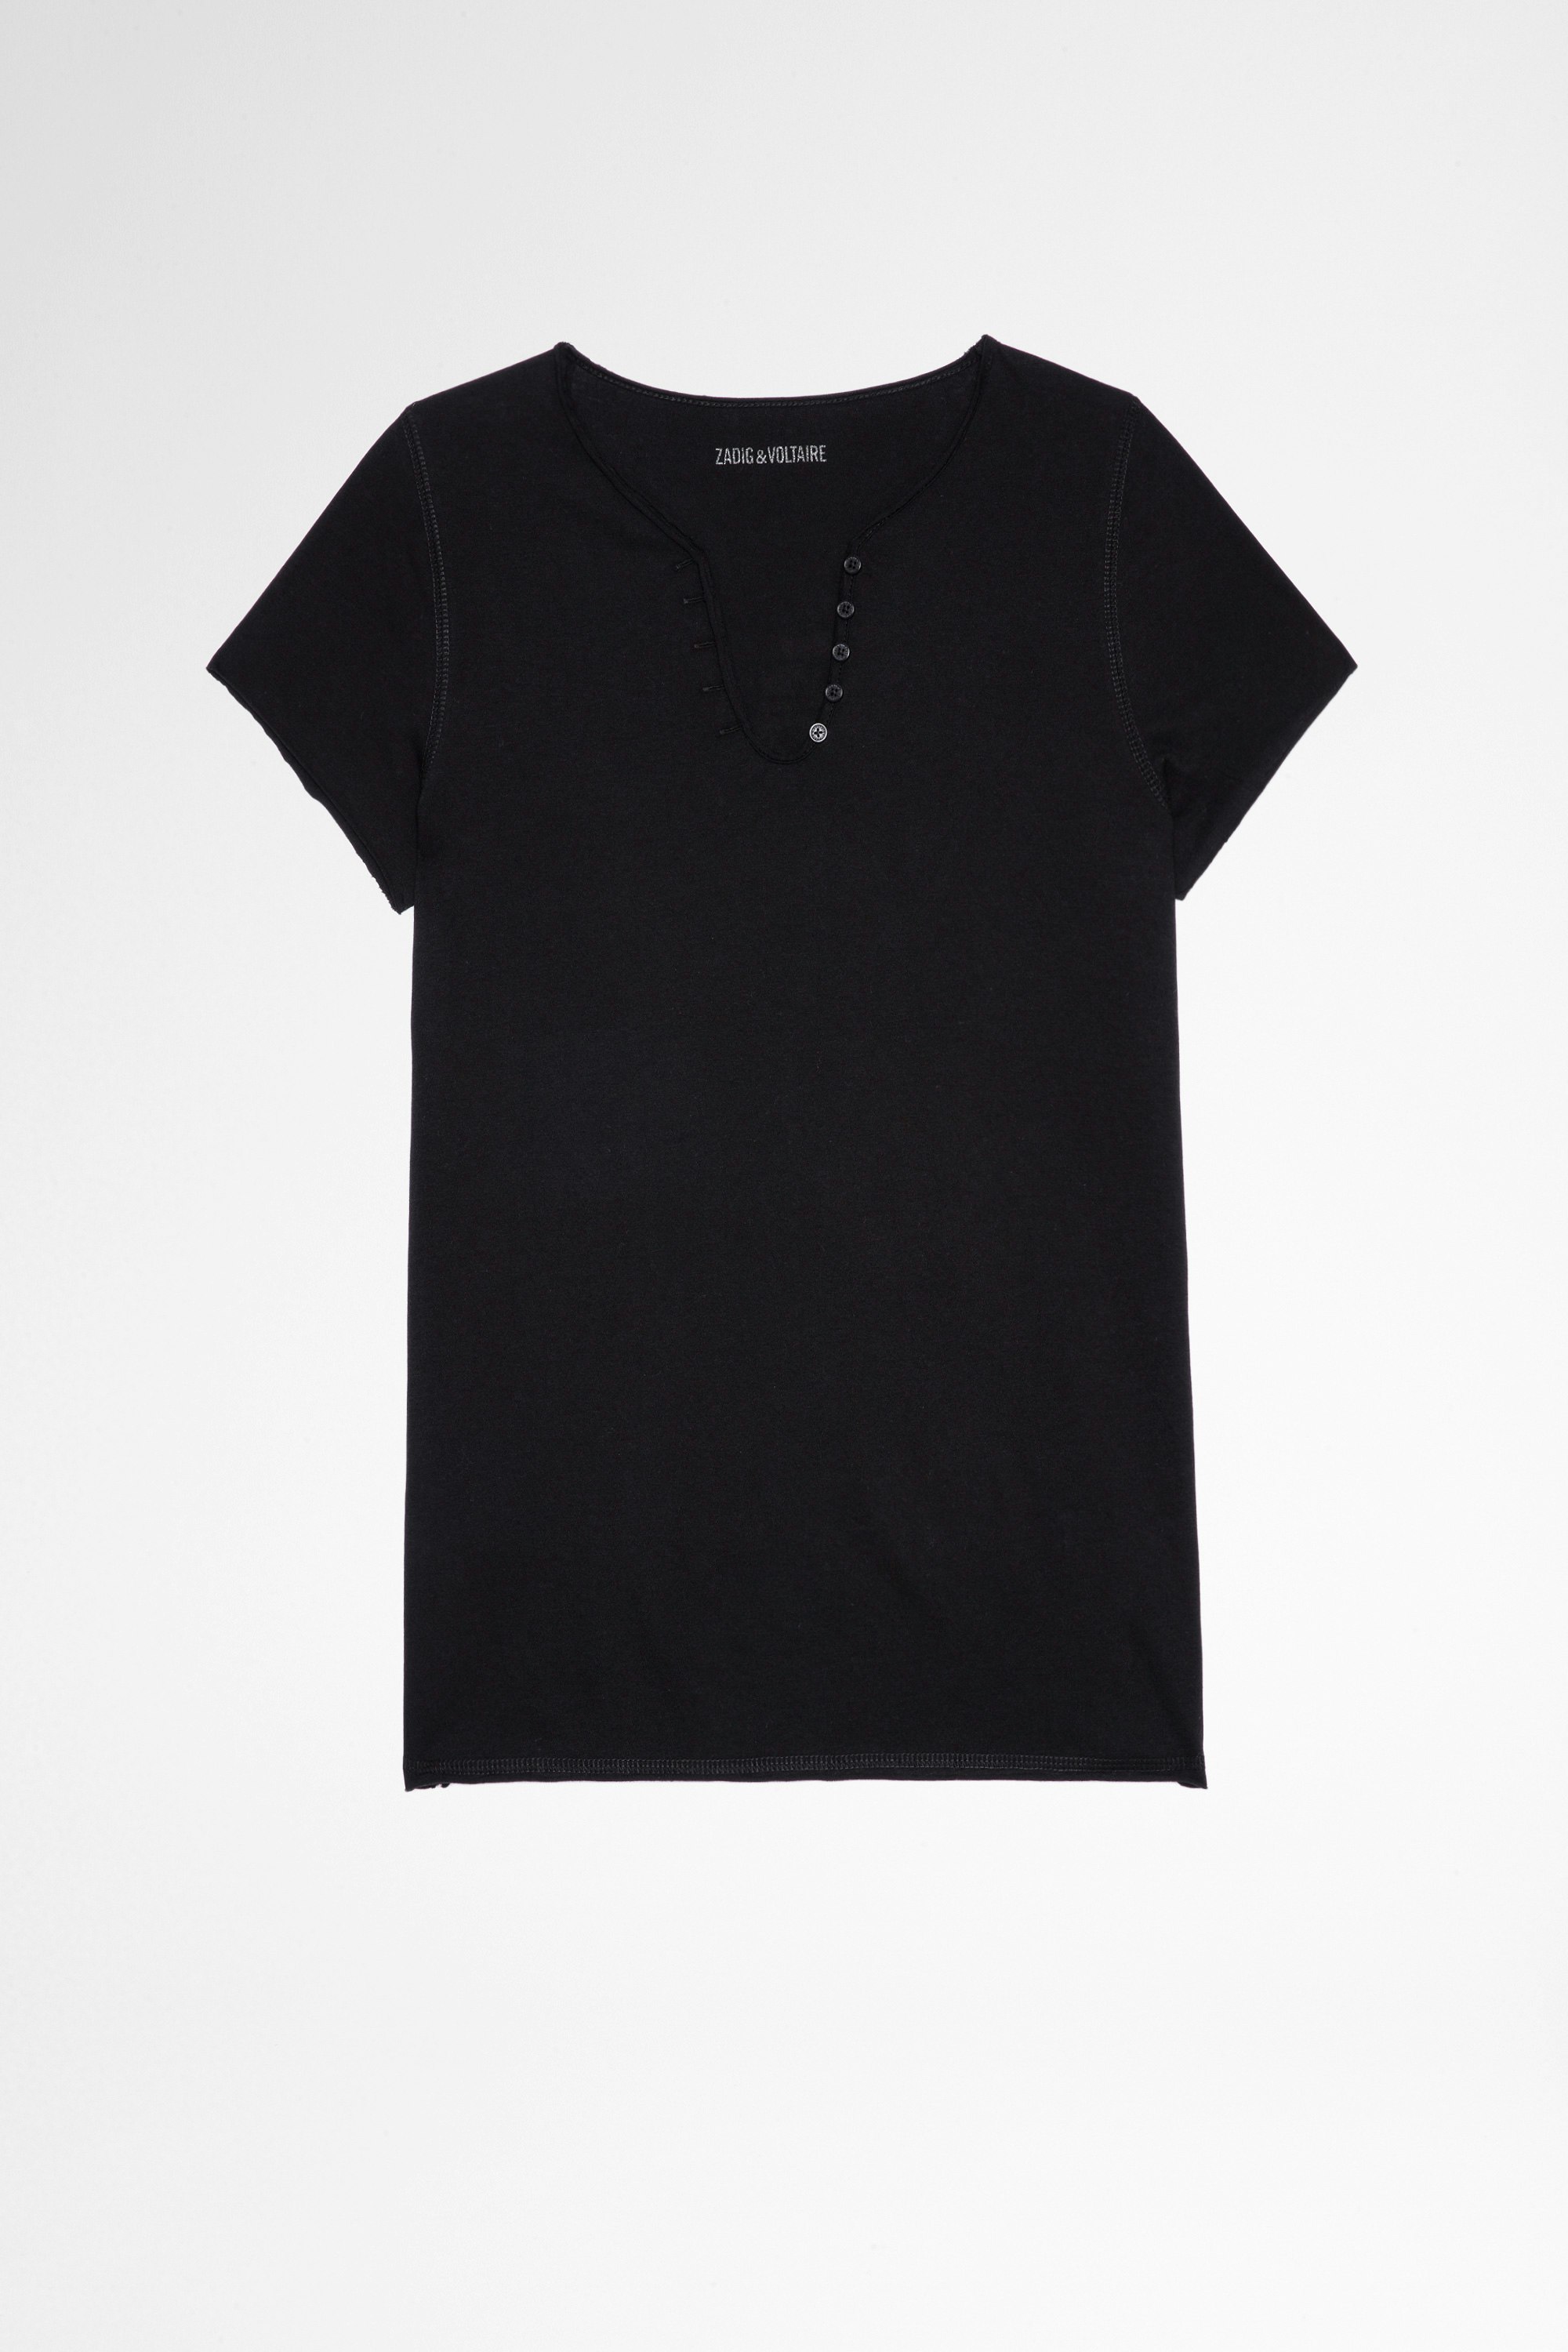 ZV New Blason Henley T-shirt Women's black cotton Henley T-shirt with ZV applique on the back